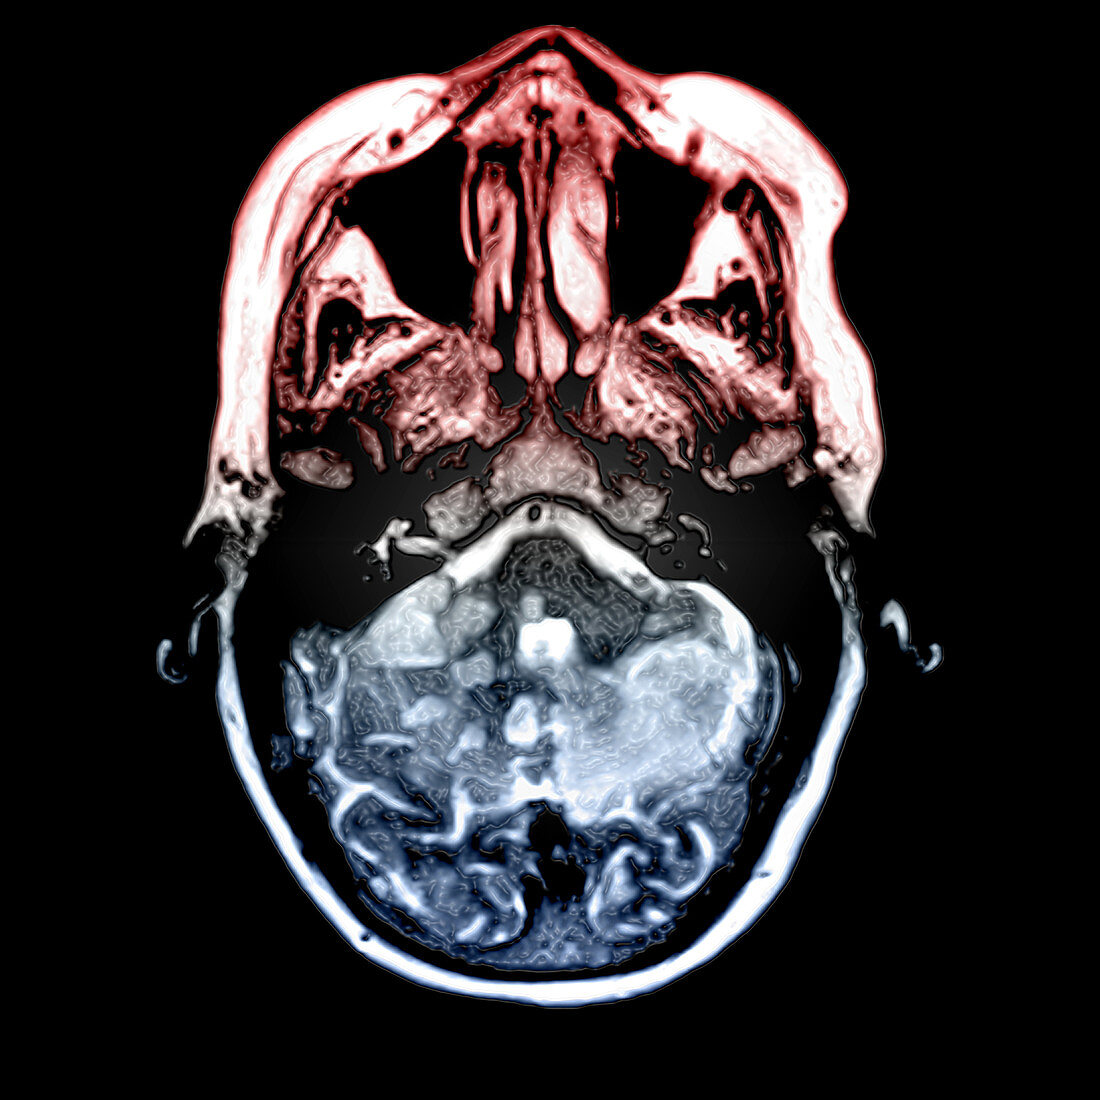 Cerebellar Infarcts on MRI